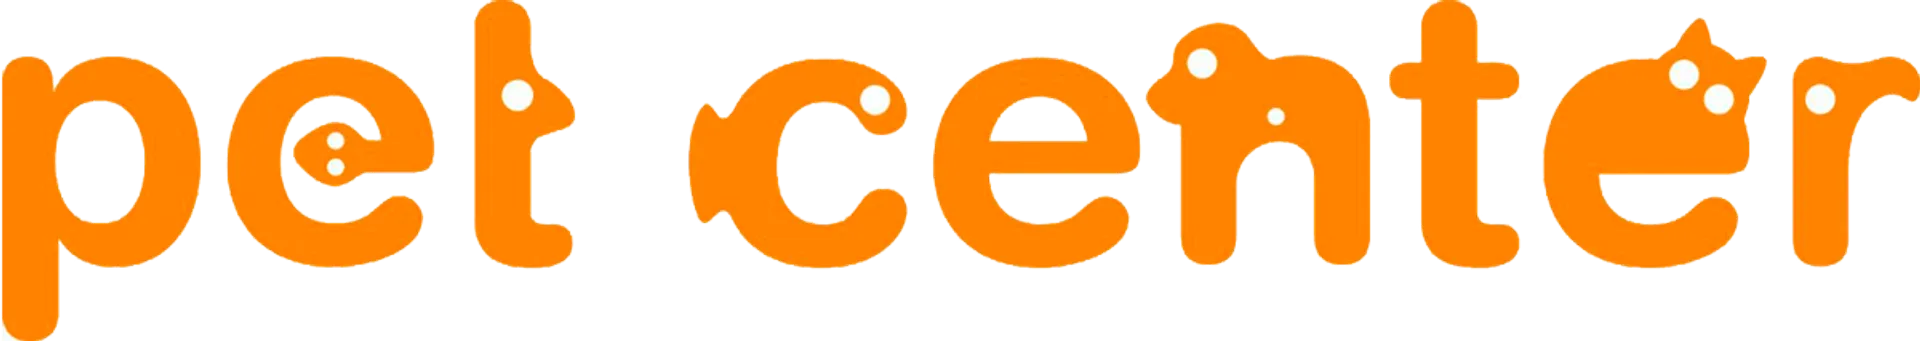 PET CENTER logo of current catalogue